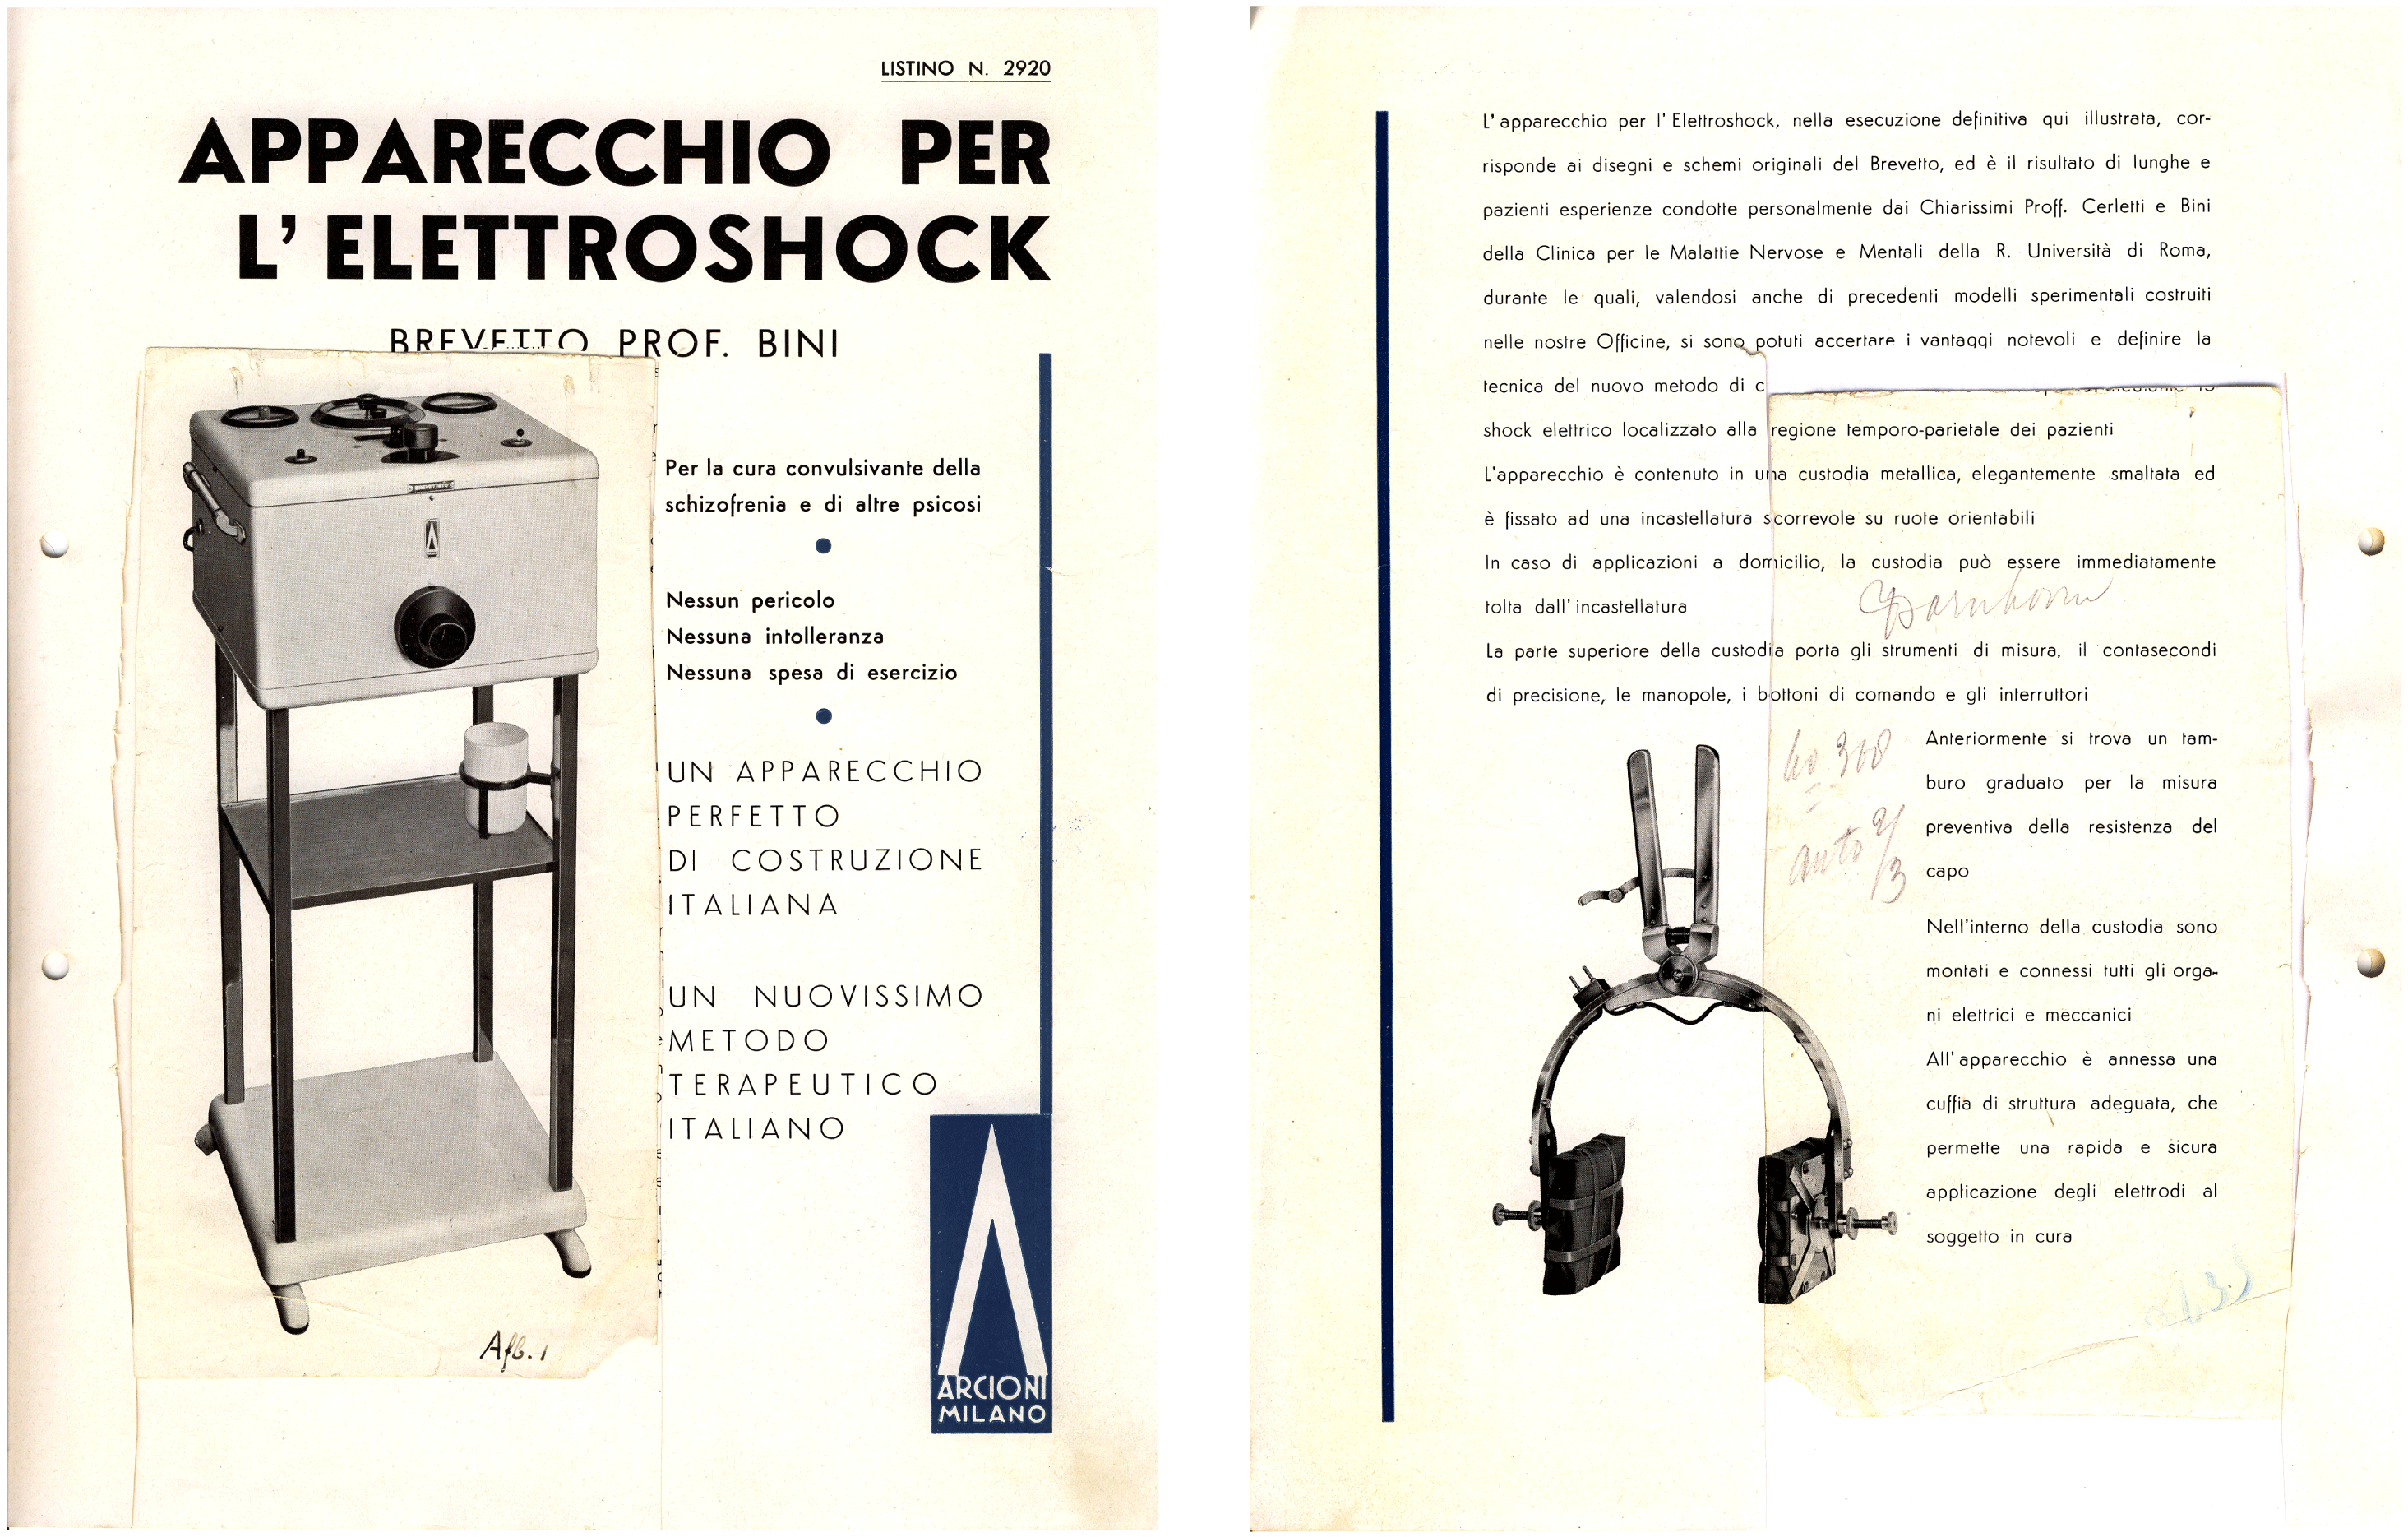 Ectonustim 3 ECT machine with scalp electrodes, English, 1958-1965.